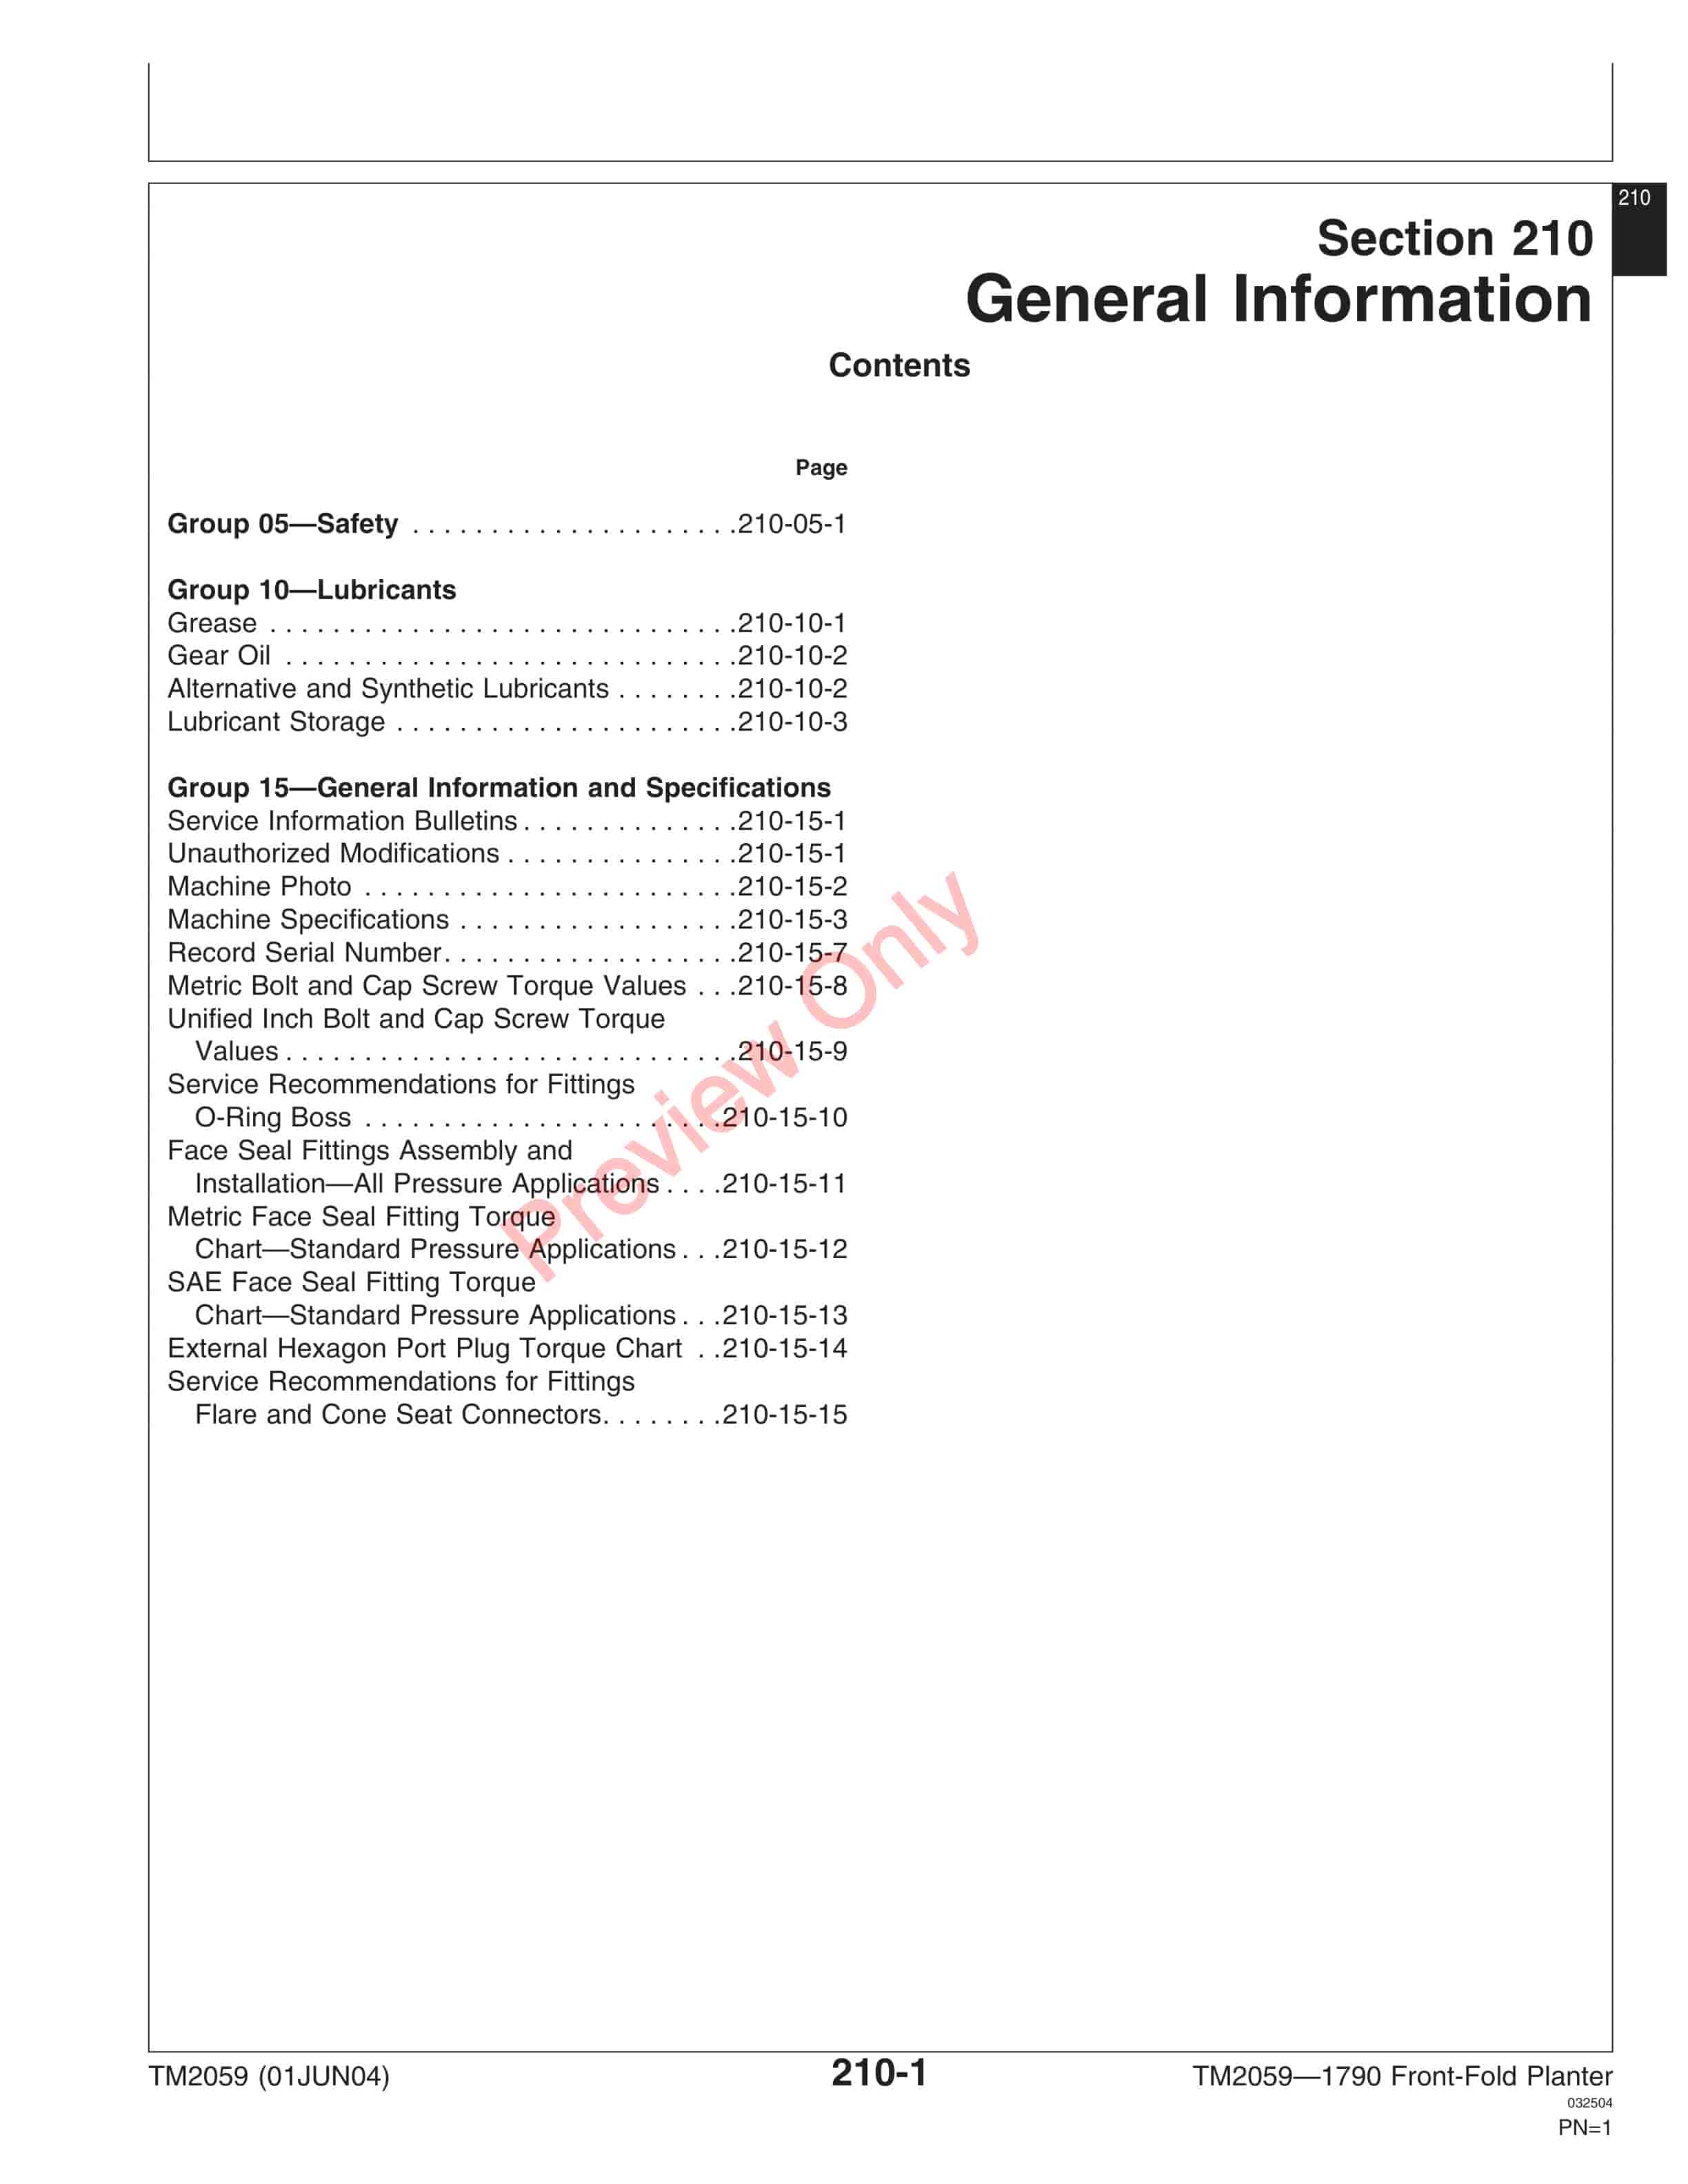 John Deere 1790 Front Fold Planter Technical Manual TM2059 01JUN04 5